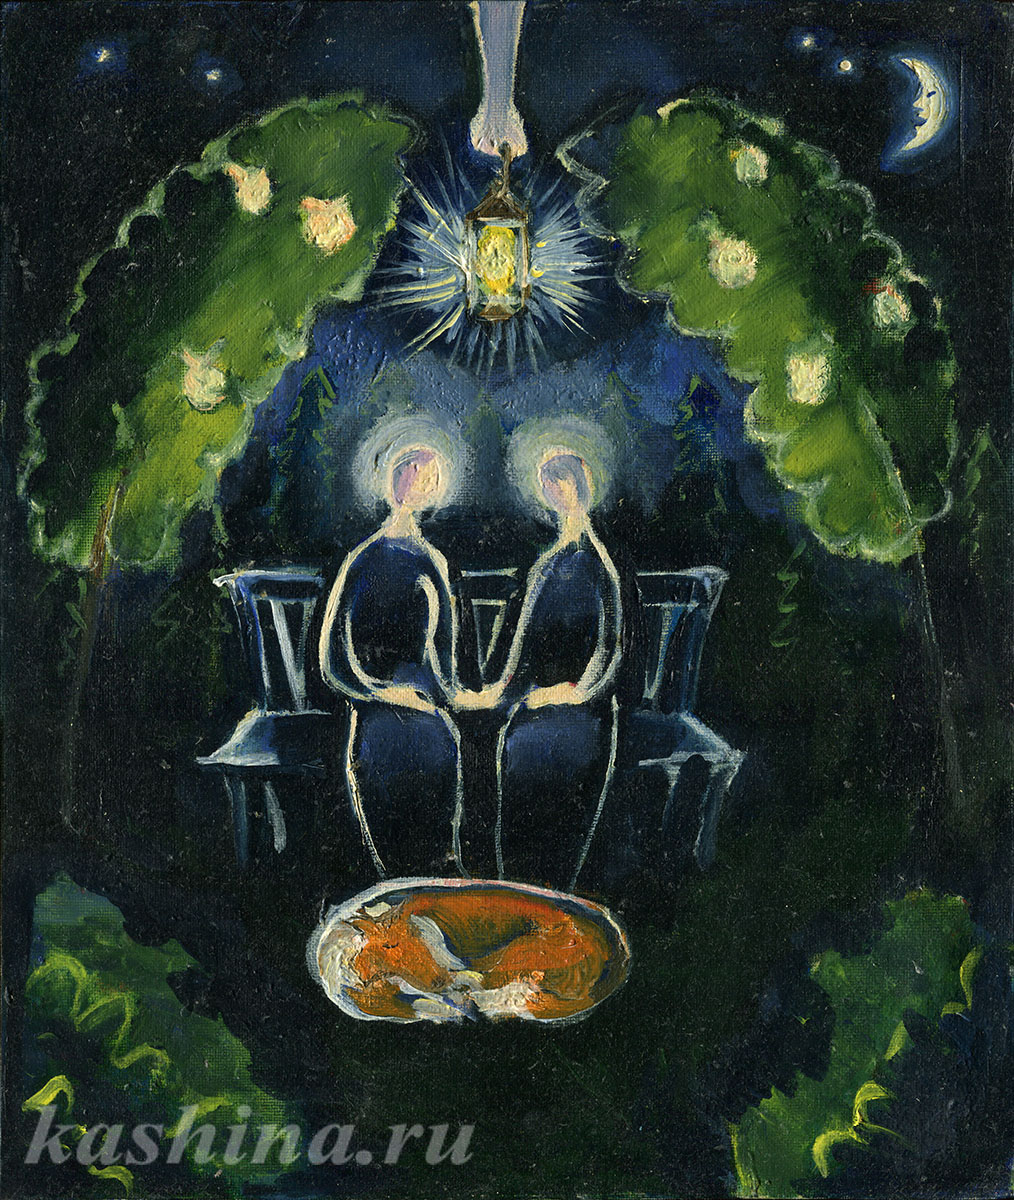 "Country supper", painting by Evgeniya Kashina